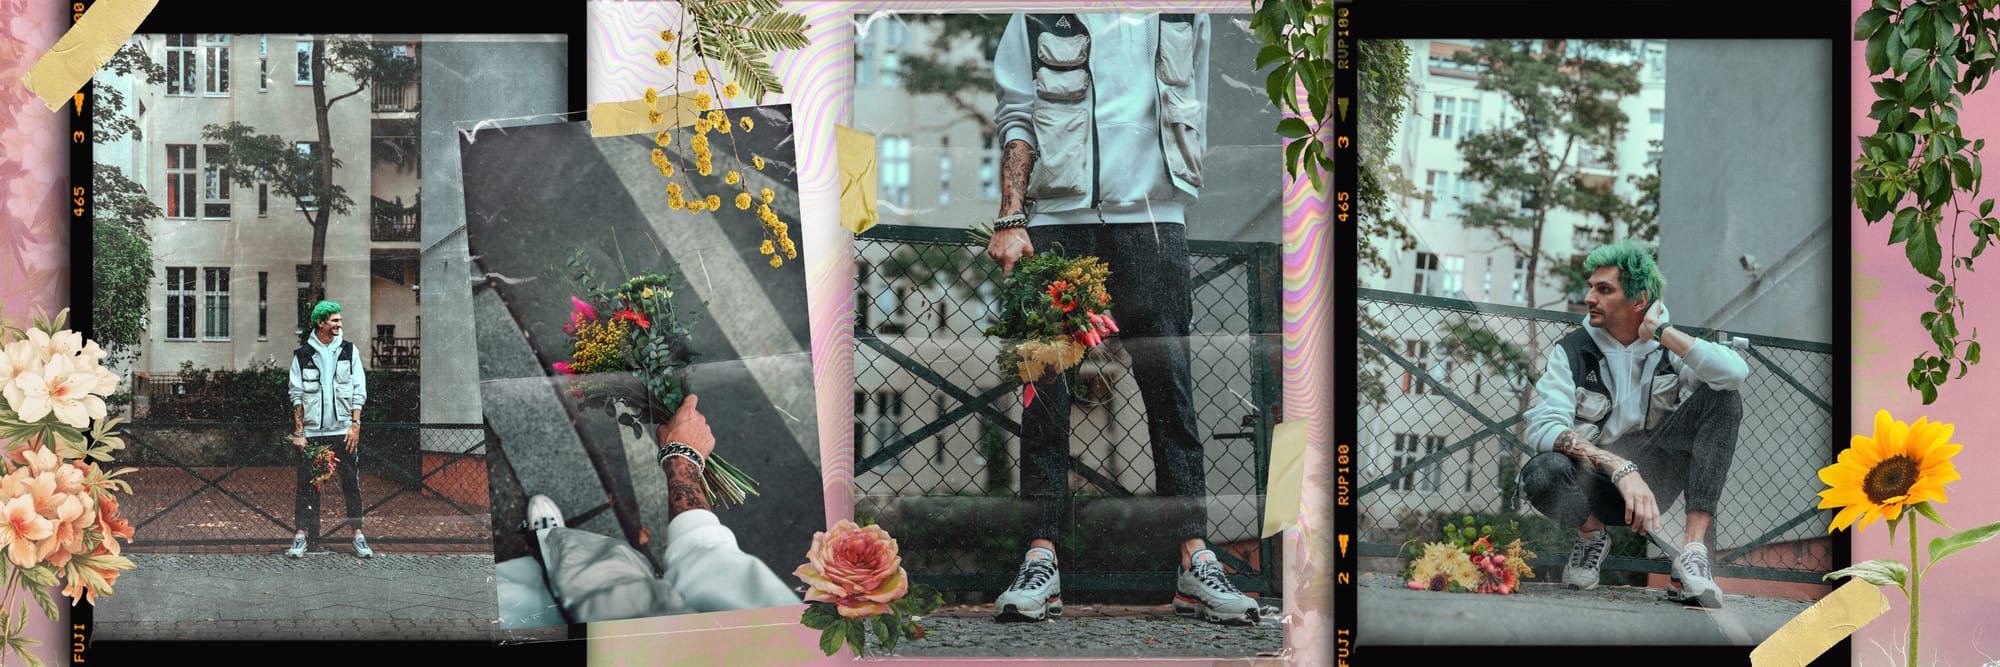 James Hersey 'flowers' Carousel image for Instagram